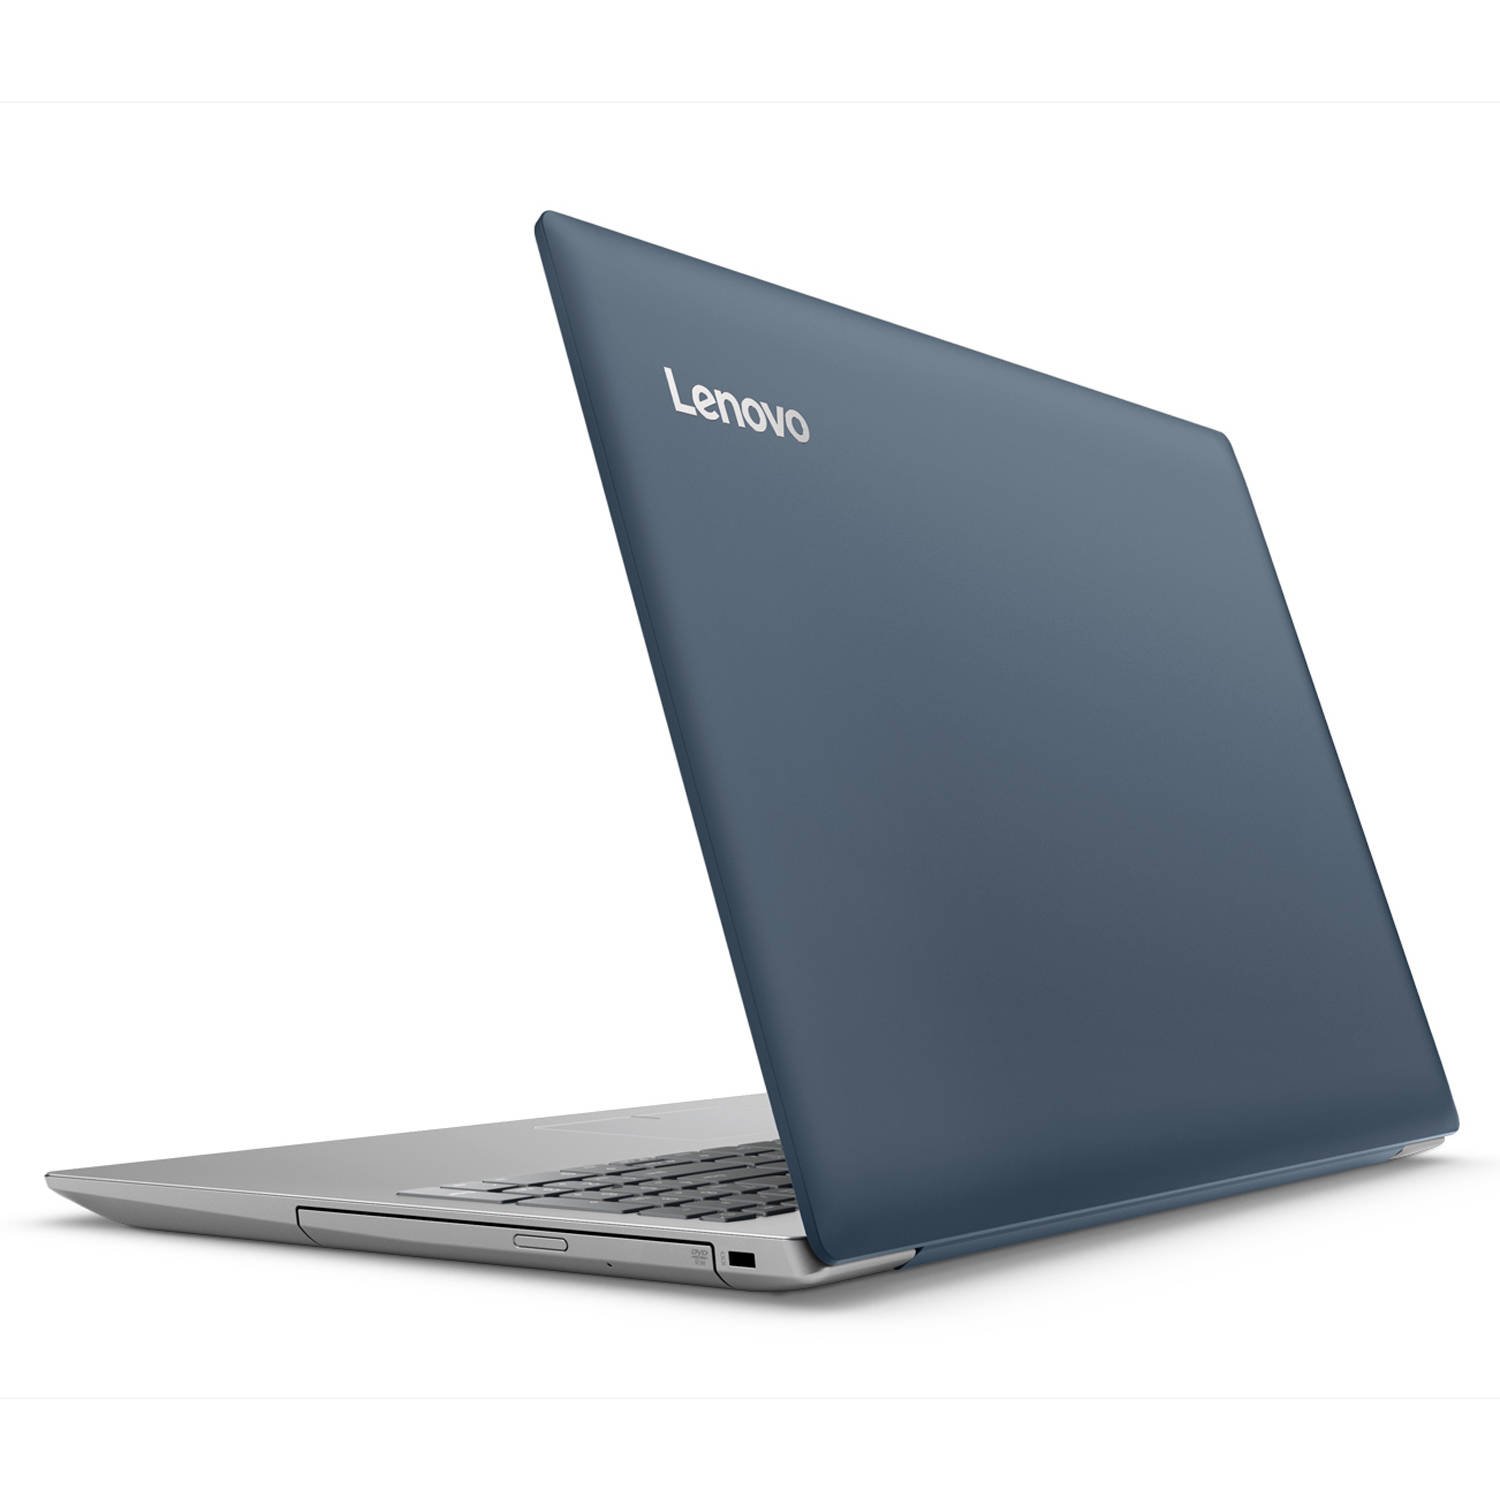 2018 Lenovo IdeaPad 320 15.6? Laptop with 3x Faster WiFi, Intel Celeron Dual Core N3350 Processor up to 2.40GHz, 4GB RAM, 1TB HDD, DVD-RW, HDMI,Bluetooth, Webcam, Win 10 - Denim Blue